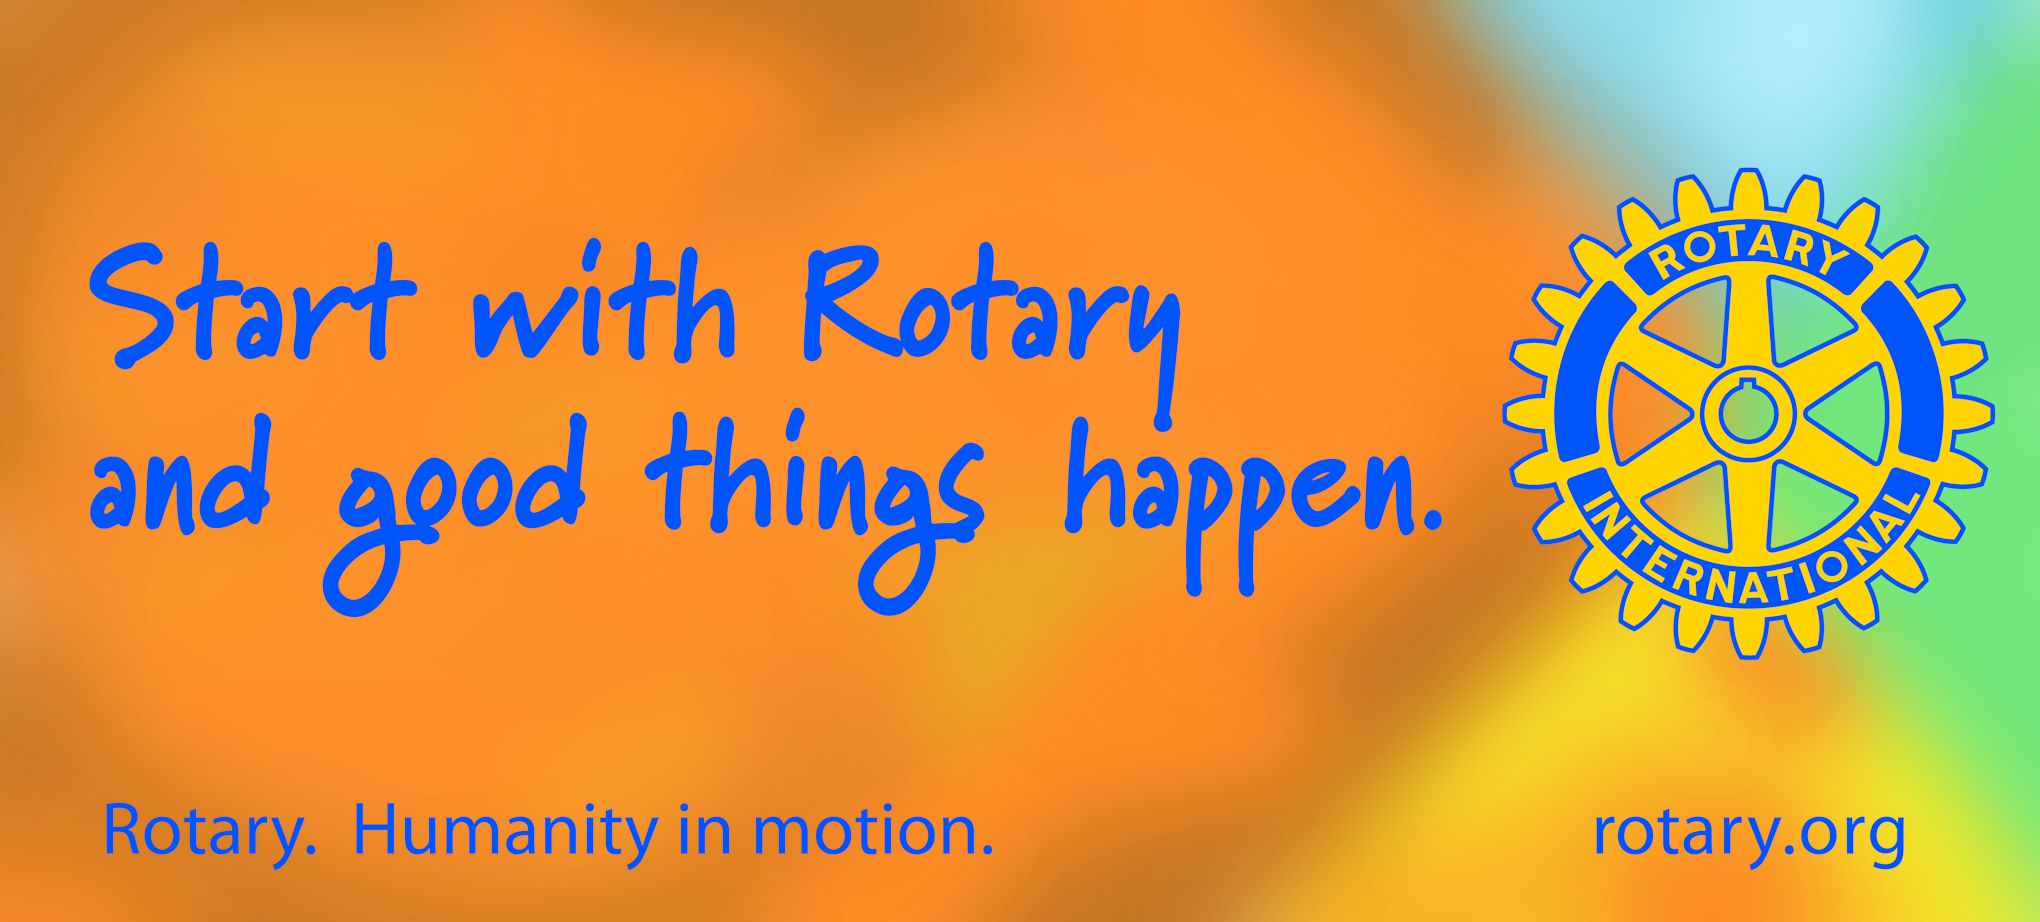 Celebrating Rotary Day on October 1